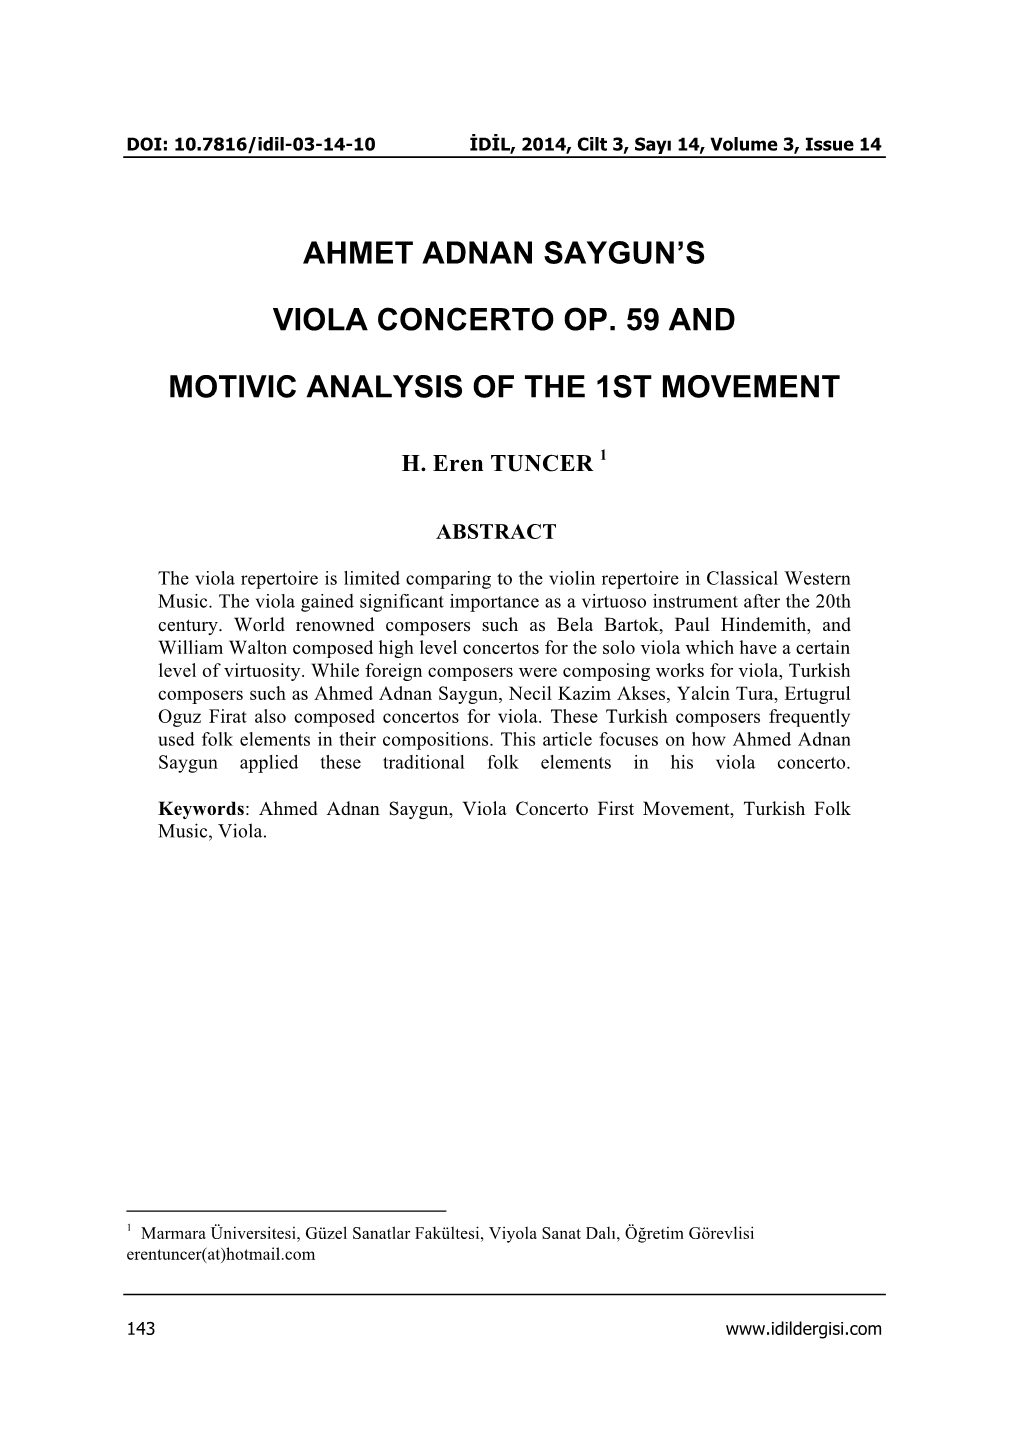 Ahmet Adnan Saygun's Viola Concerto Op. 59 and Motivic